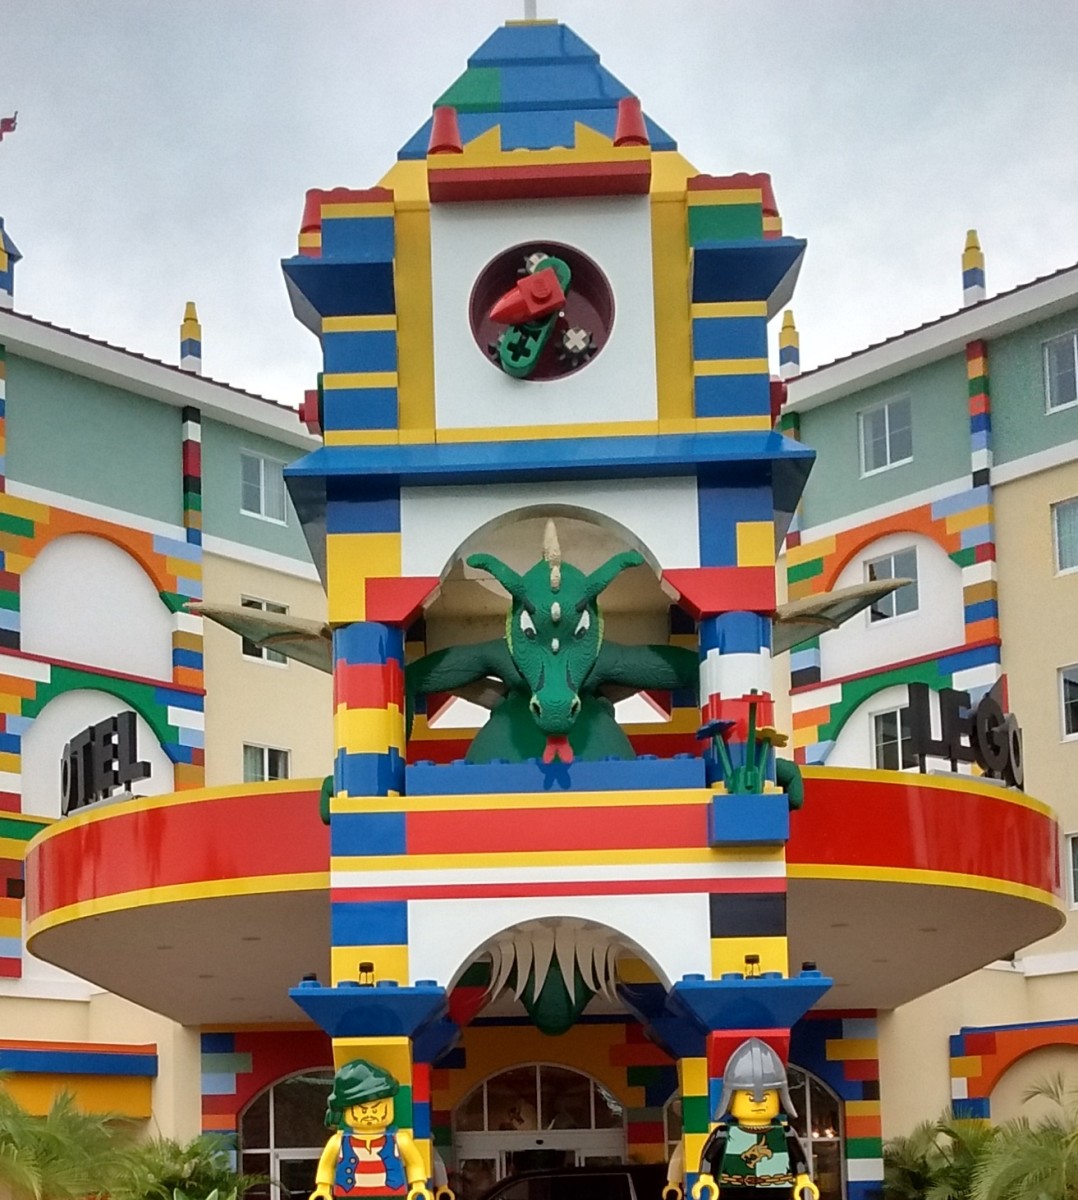 Legoland Hotel: Is It Worth $500 per Night?